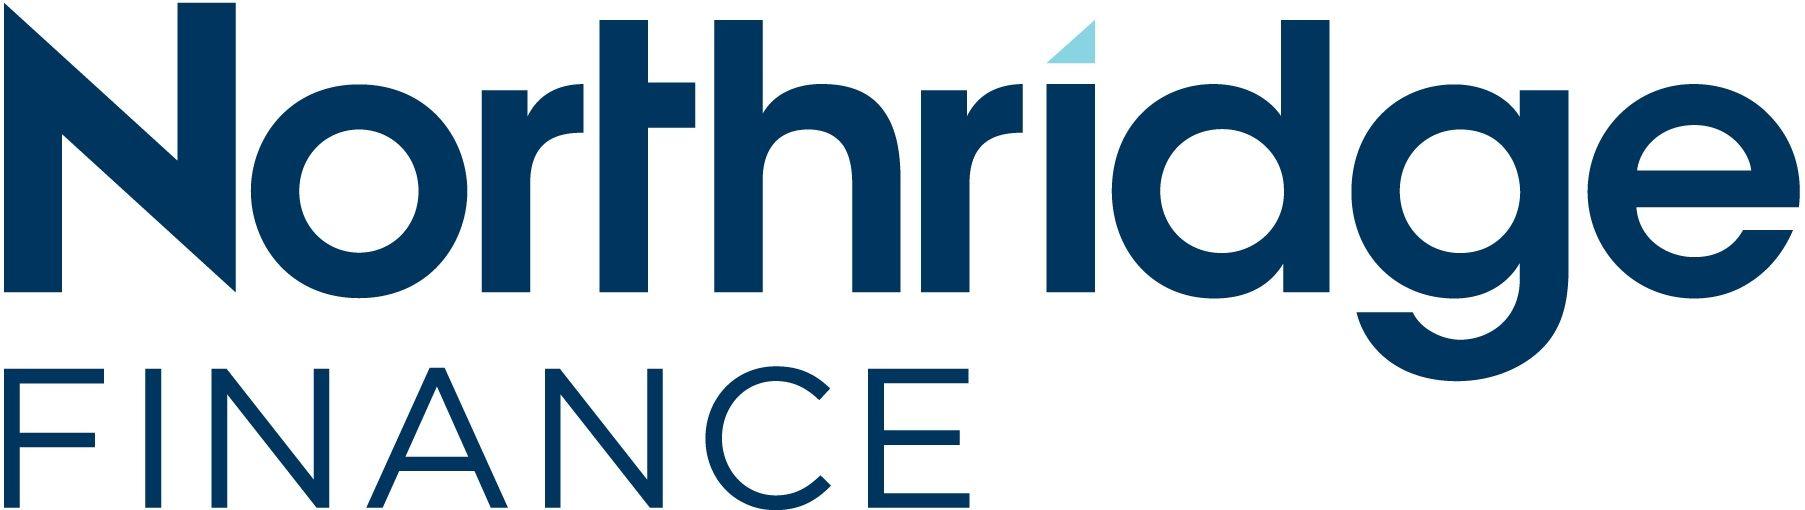 Northridge Logo - Home FinanceNorthridge Finance